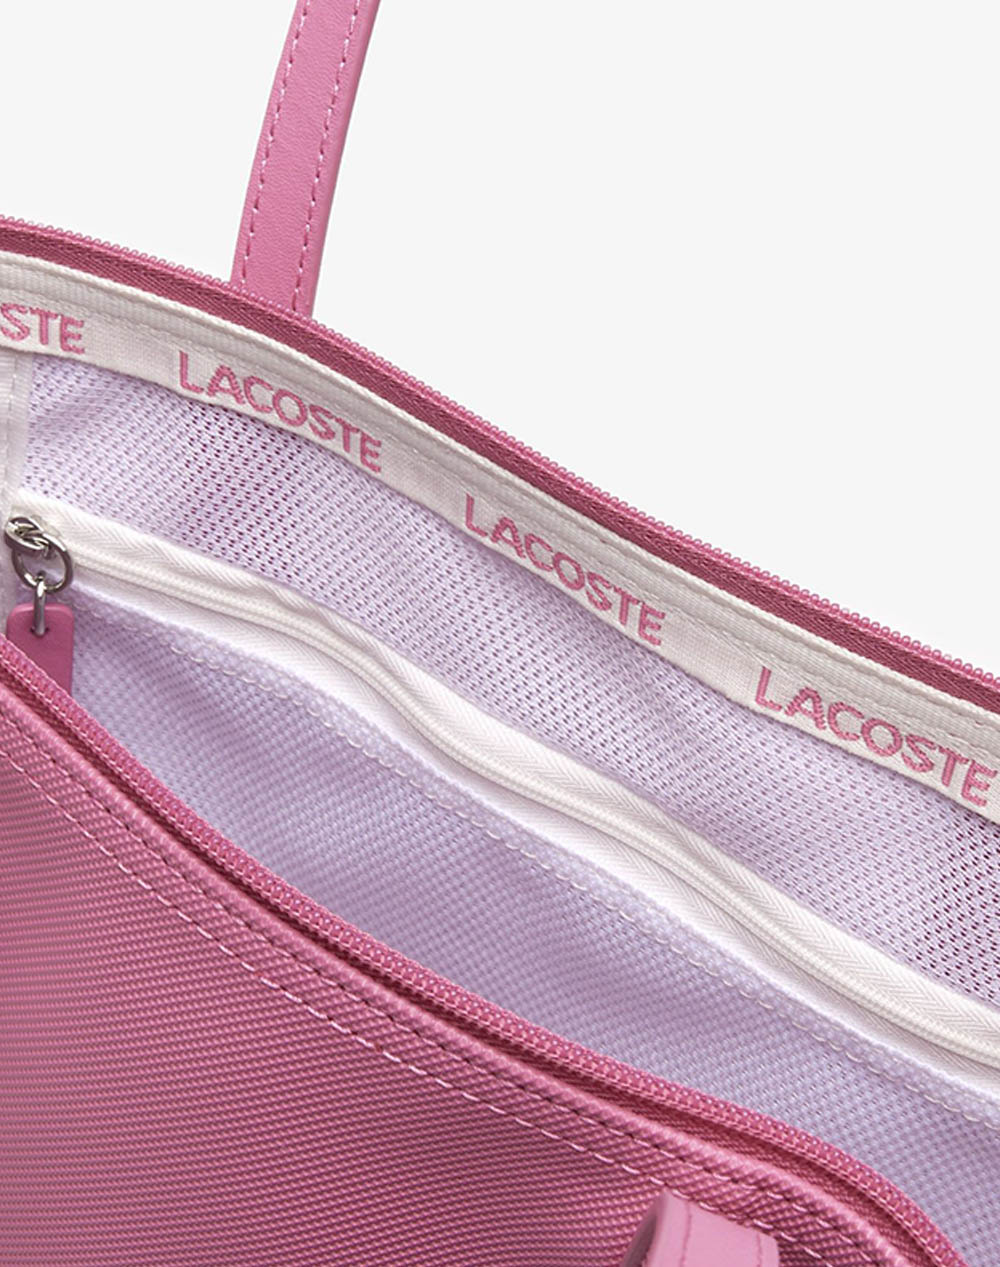  Lacoste womens L.12.12 Tote Shoulder Handbag, Surf the Web, 35  x 30 14 cm US : Clothing, Shoes & Jewelry